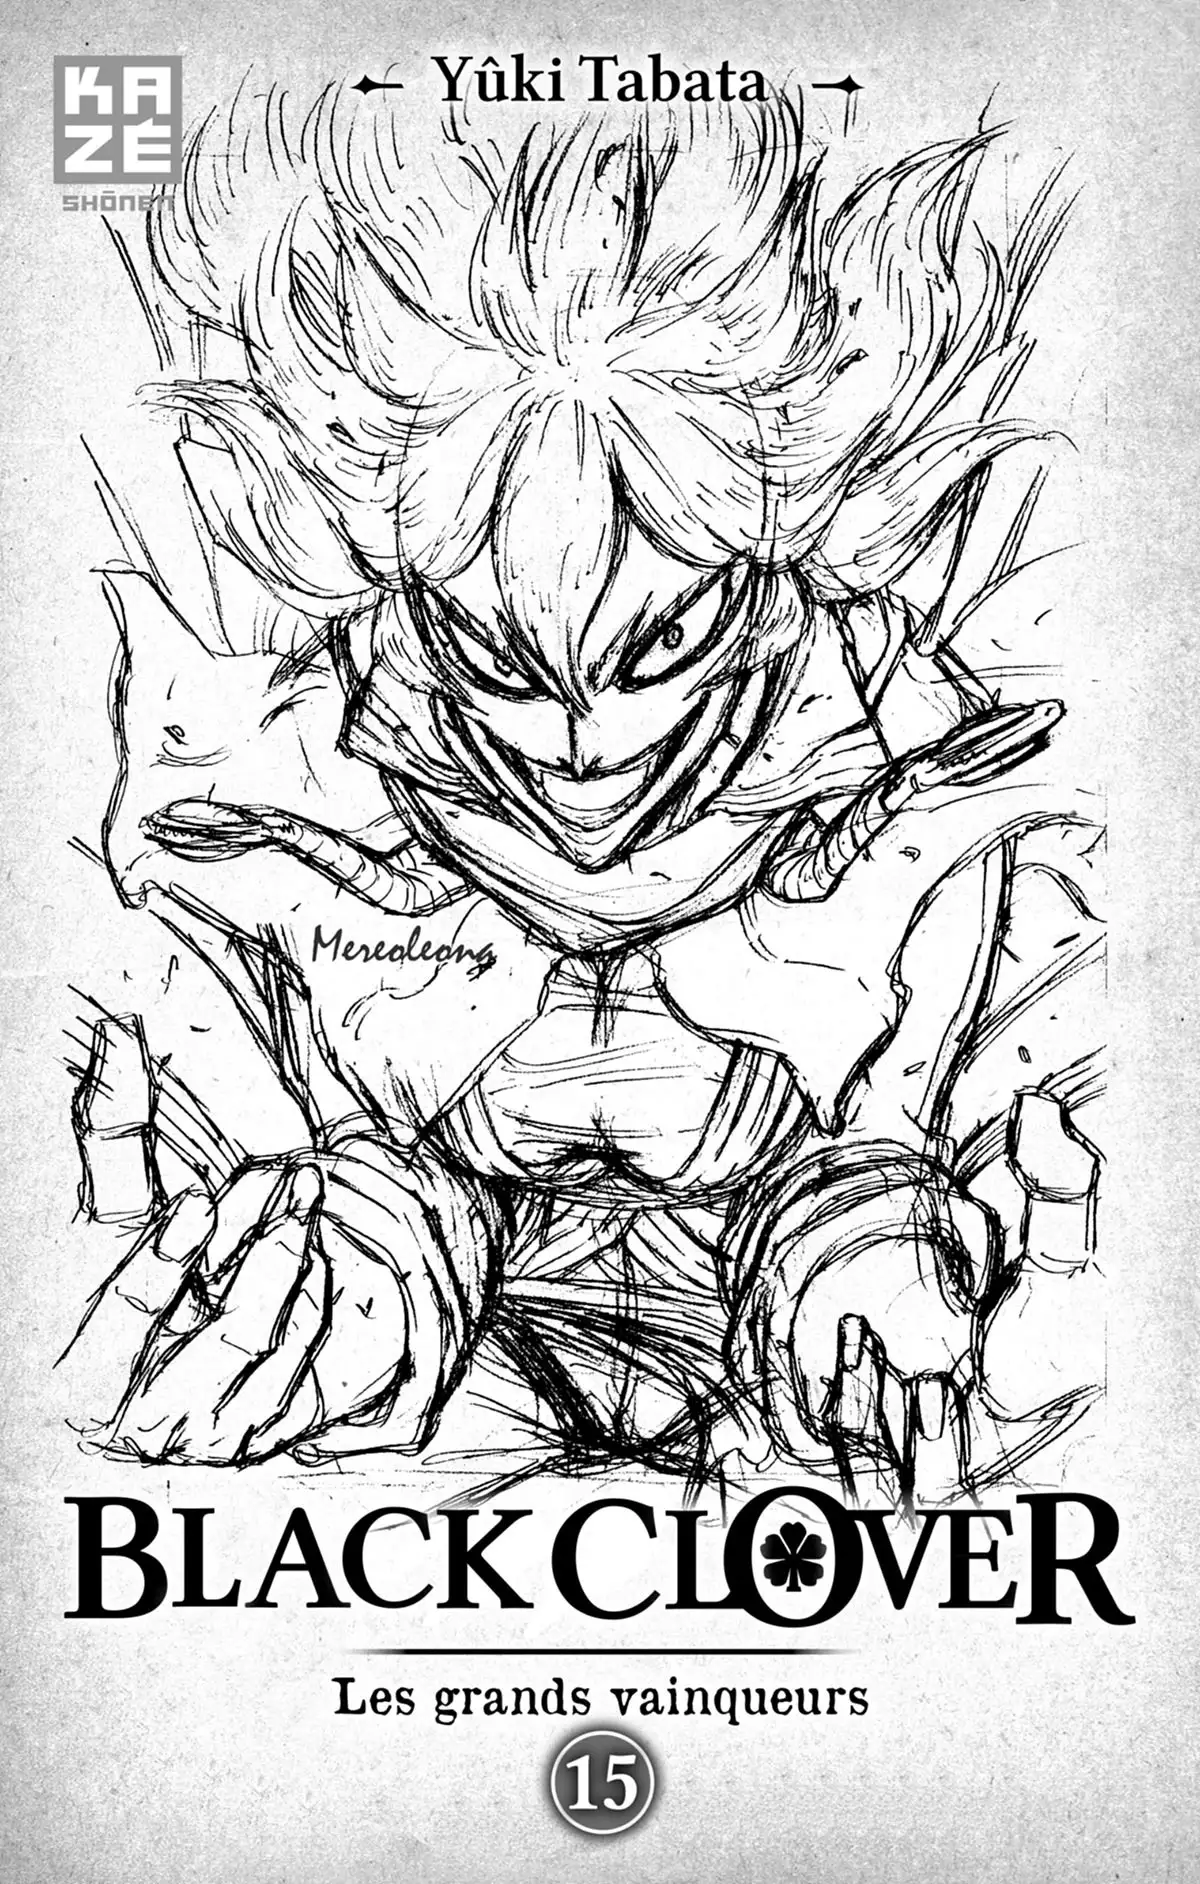 Black Clover Volume 15 page 2